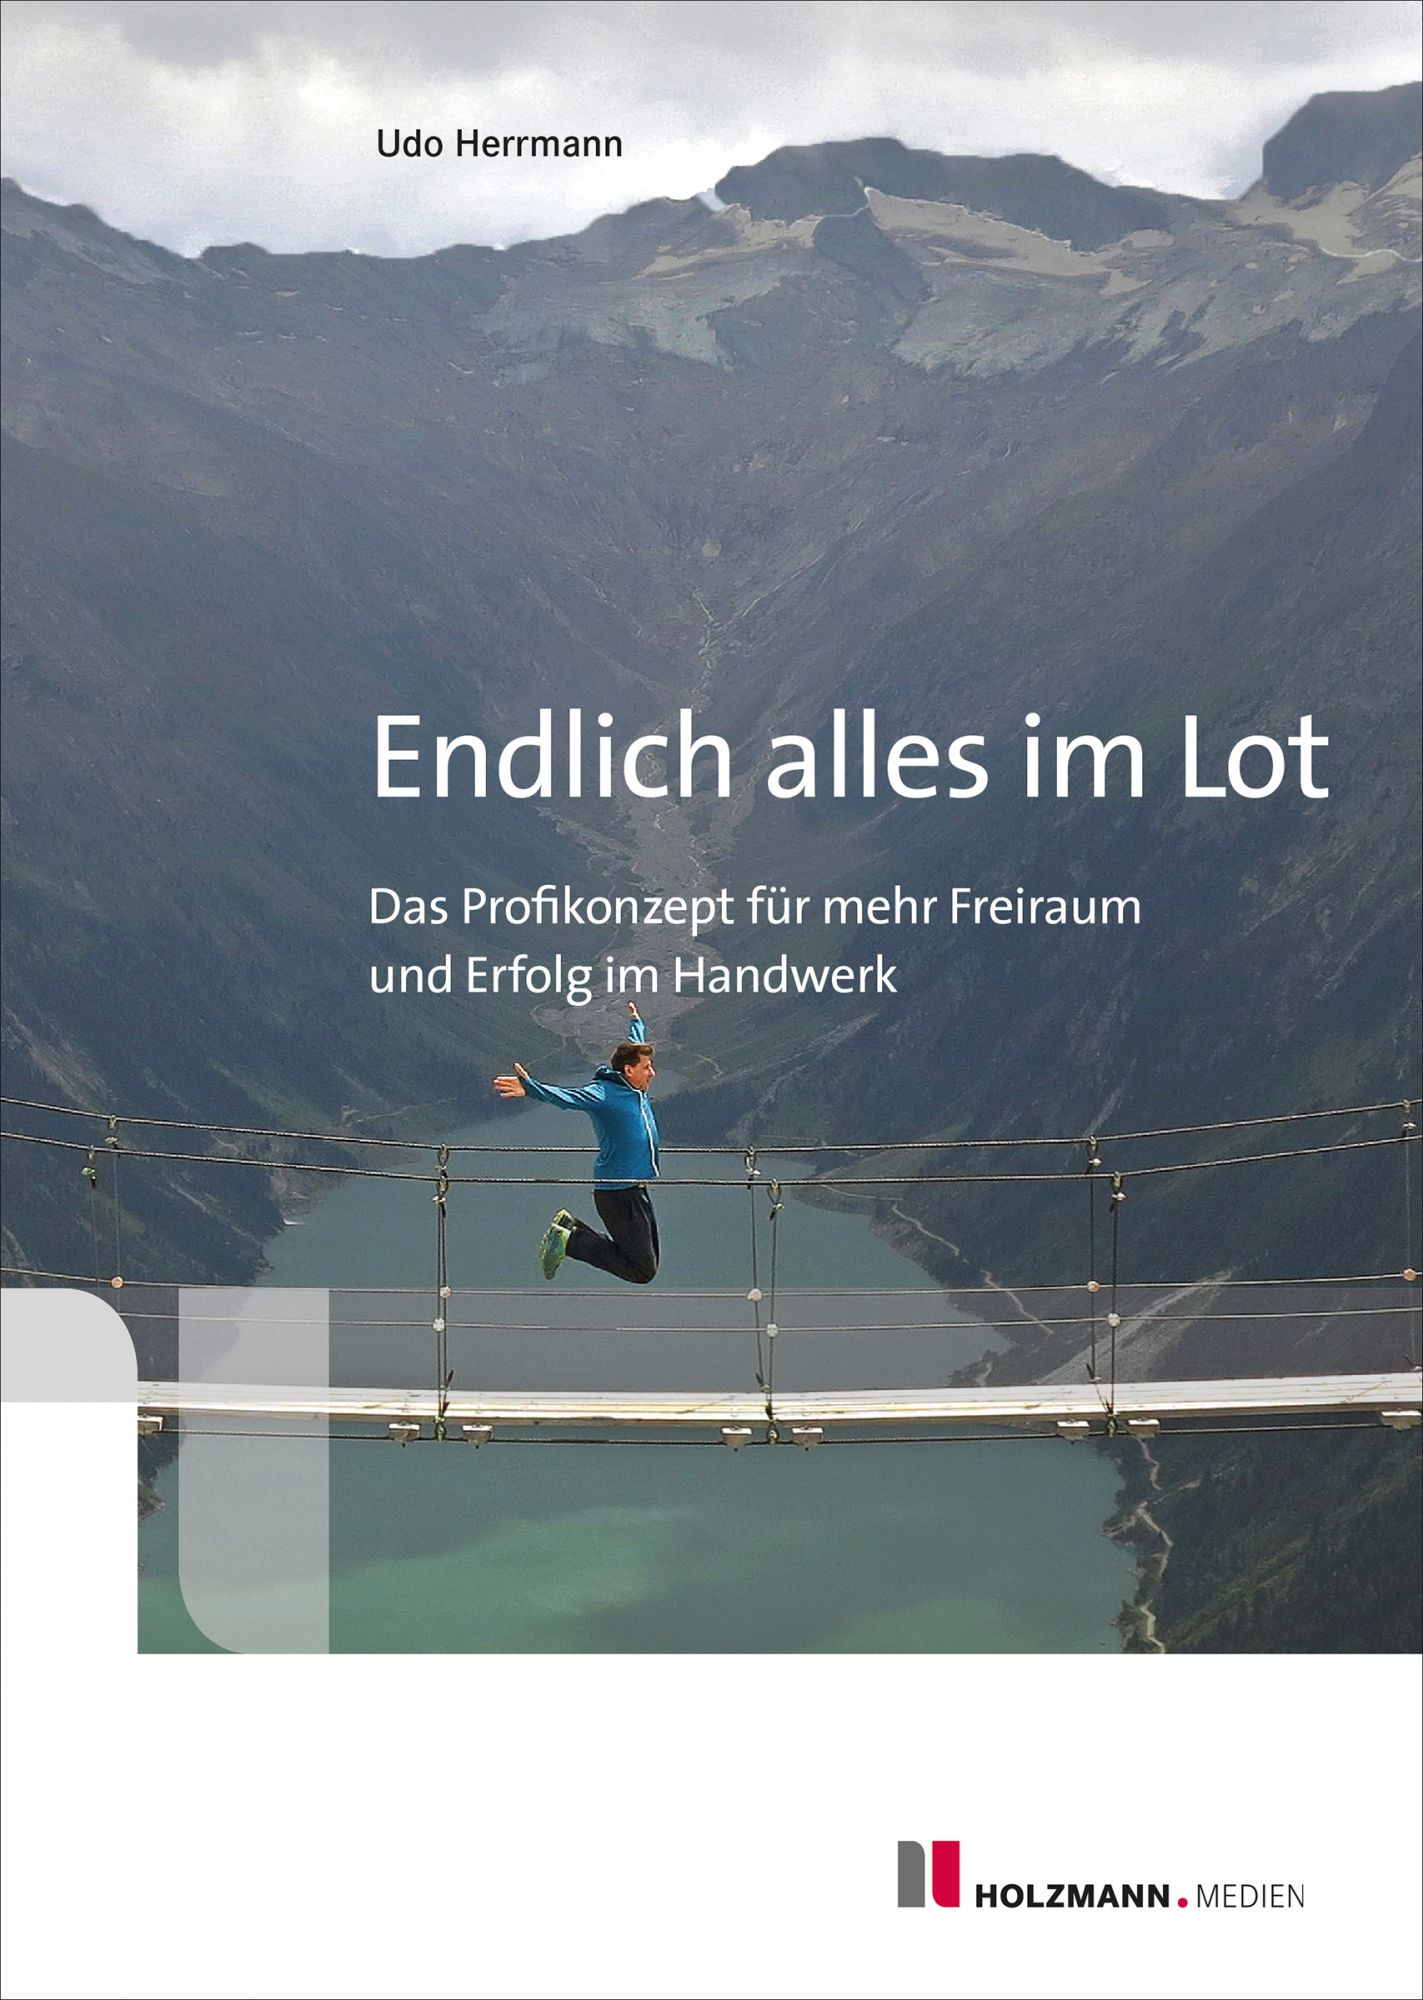 e-book-cover_endlich-alles-im-lot_udo-herrmann.jpg